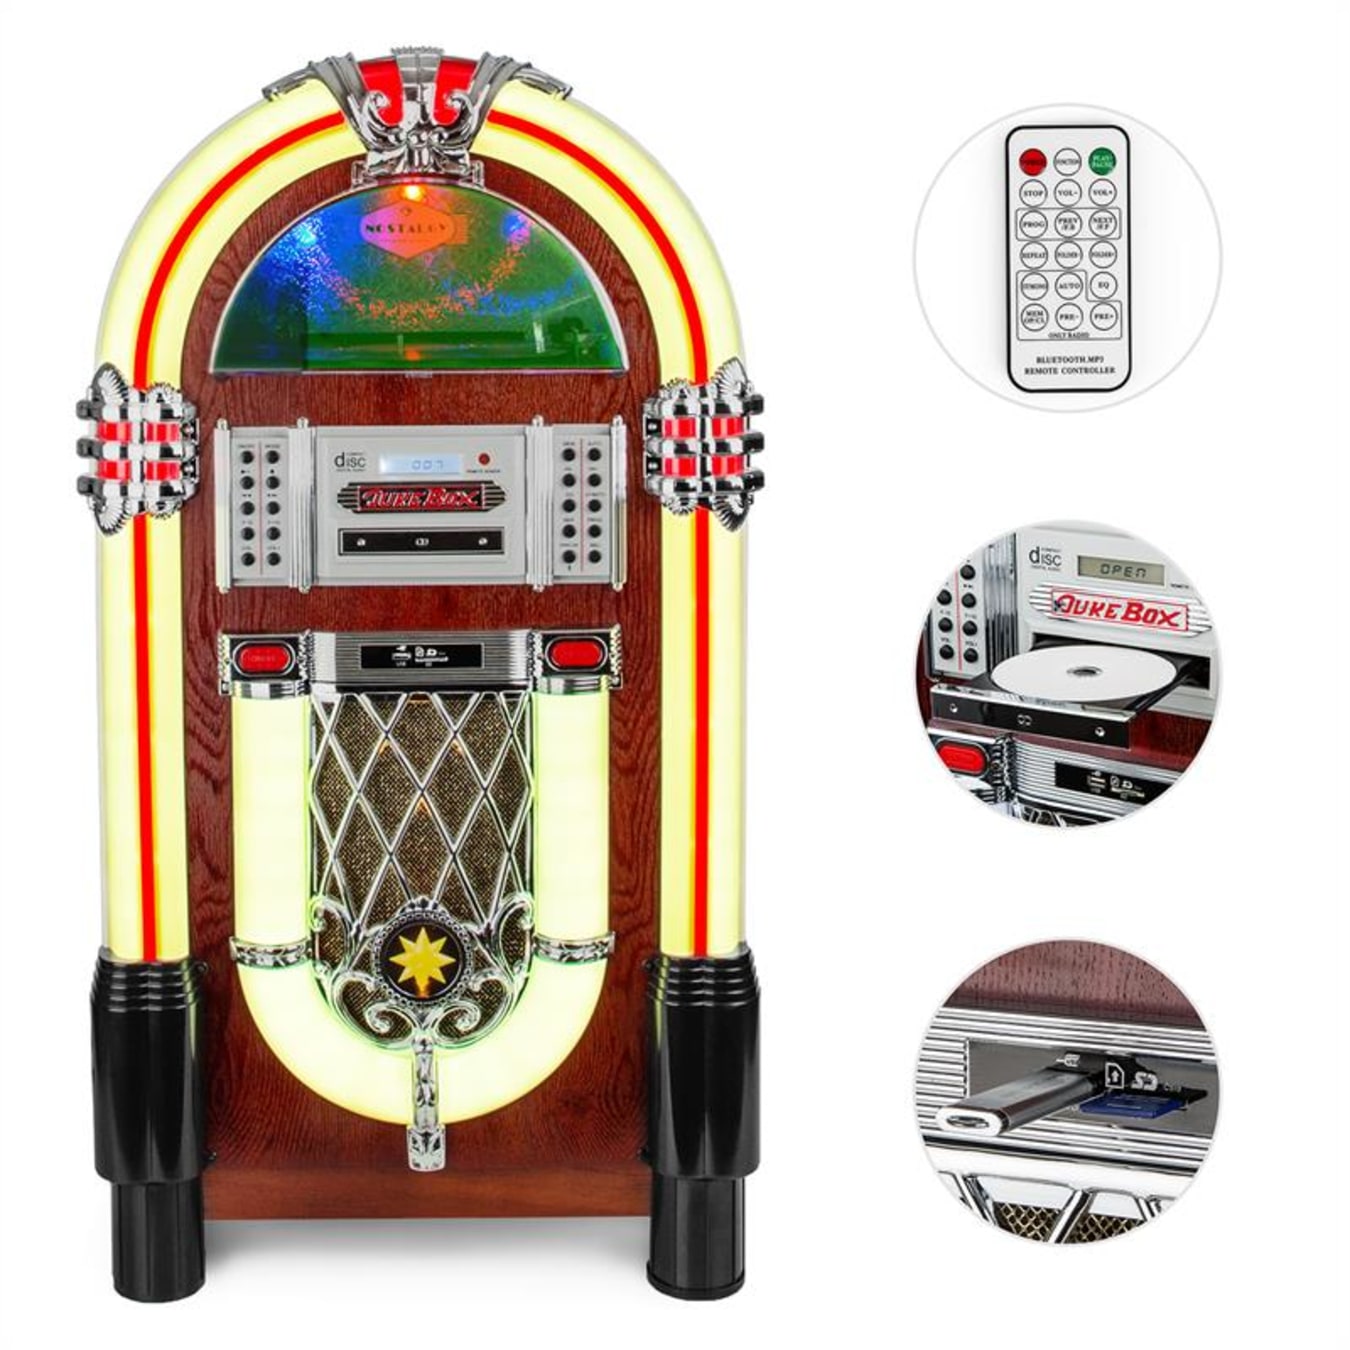  AUNA Graceland Jukebox - USB, SD, AUX, AM/FM Radio